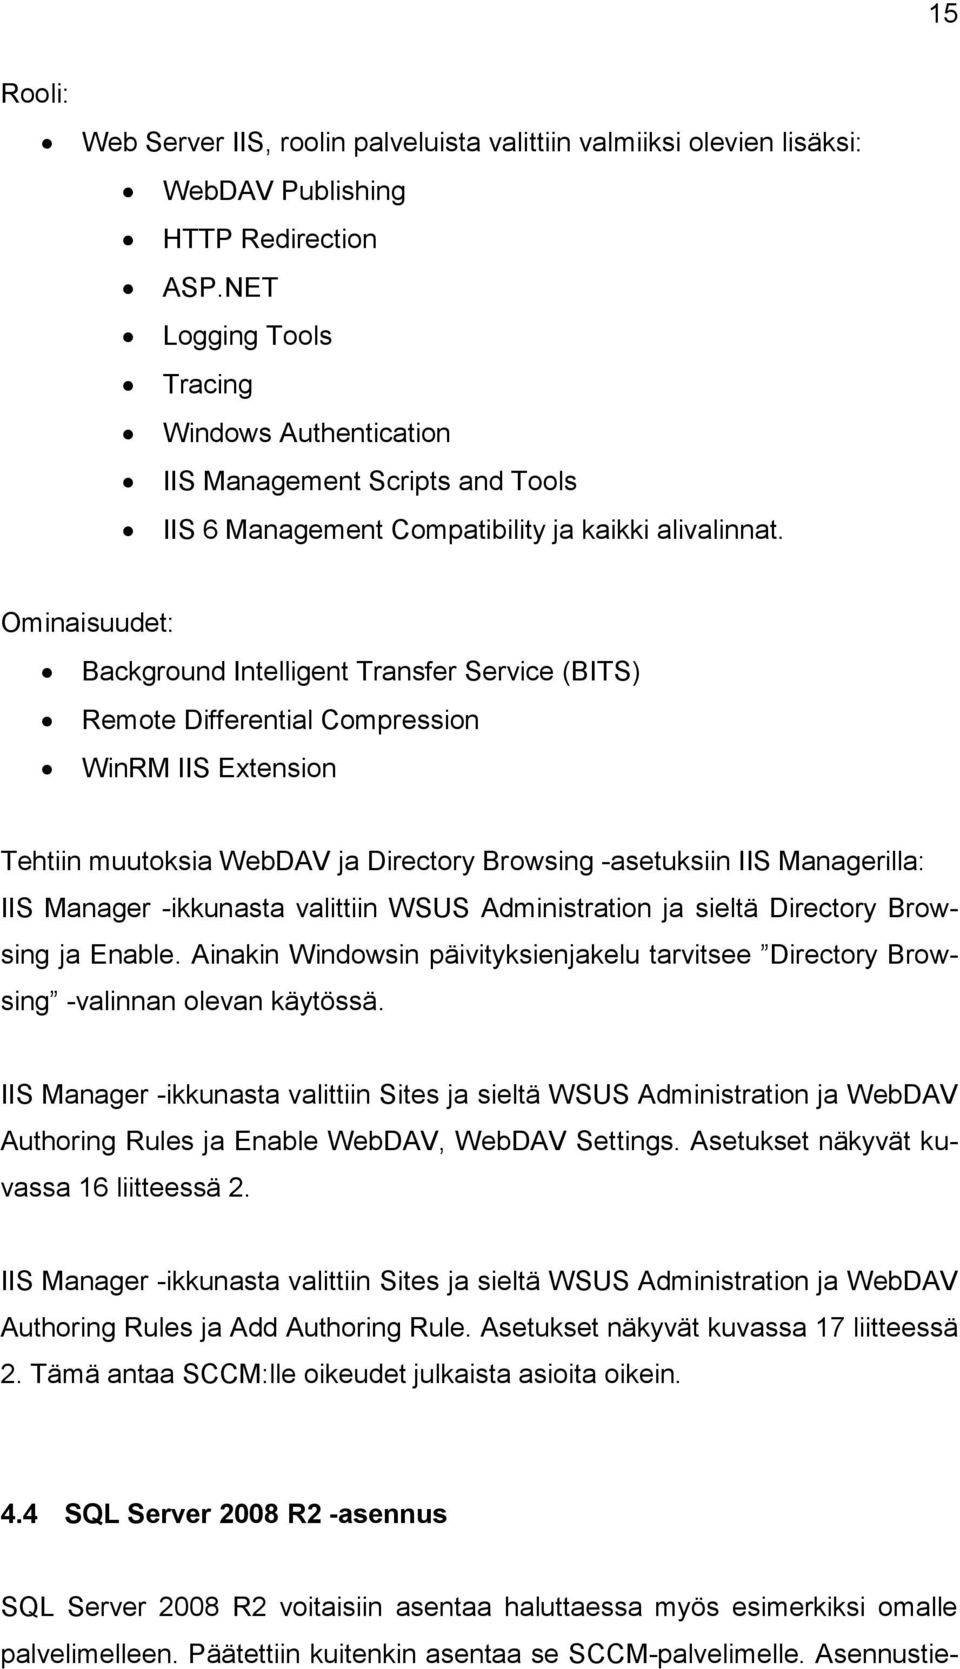 Ominaisuudet: Background Intelligent Transfer Service (BITS) Remote Differential Compression WinRM IIS Extension Tehtiin muutoksia WebDAV ja Directory Browsing -asetuksiin IIS Managerilla: IIS